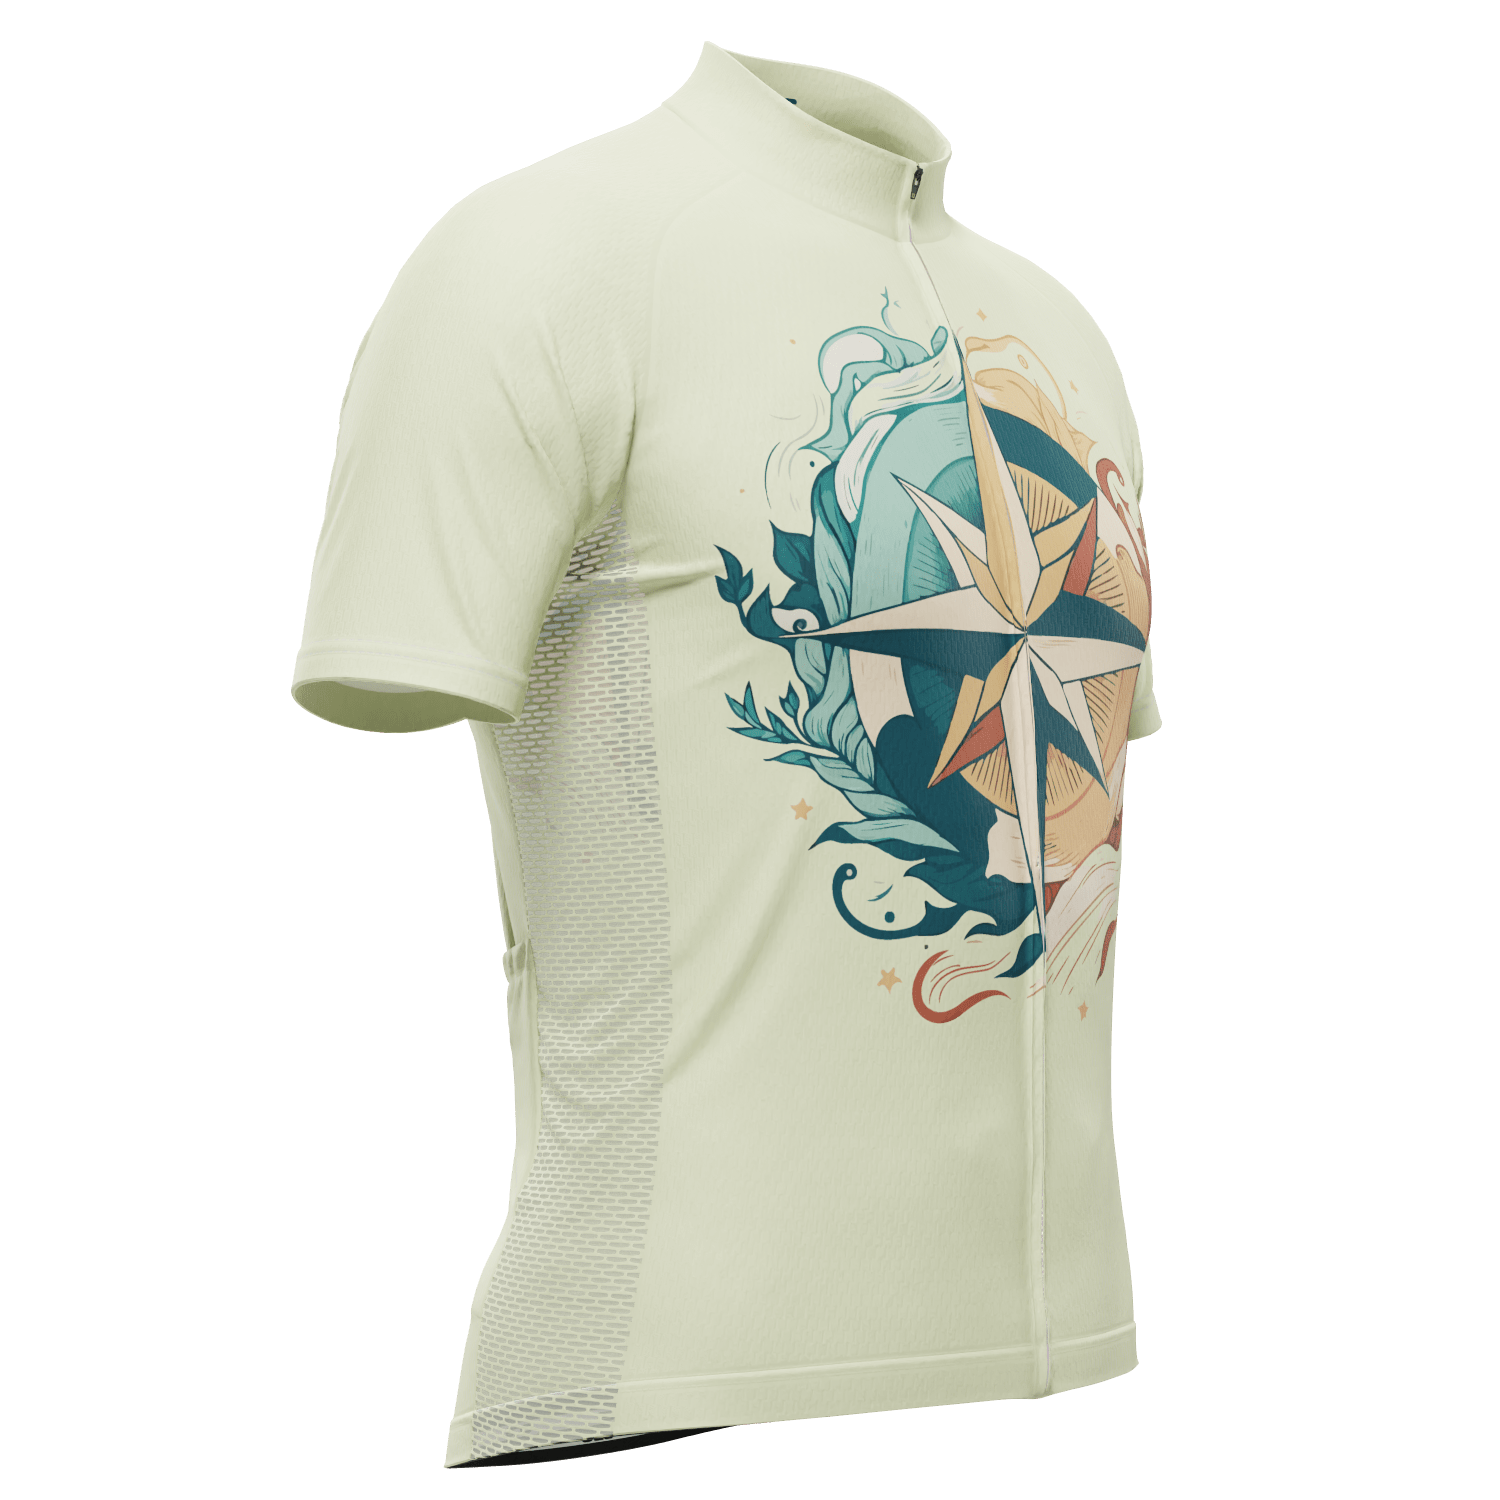 Men's Compass Rose Short Sleeve Cycling Jersey